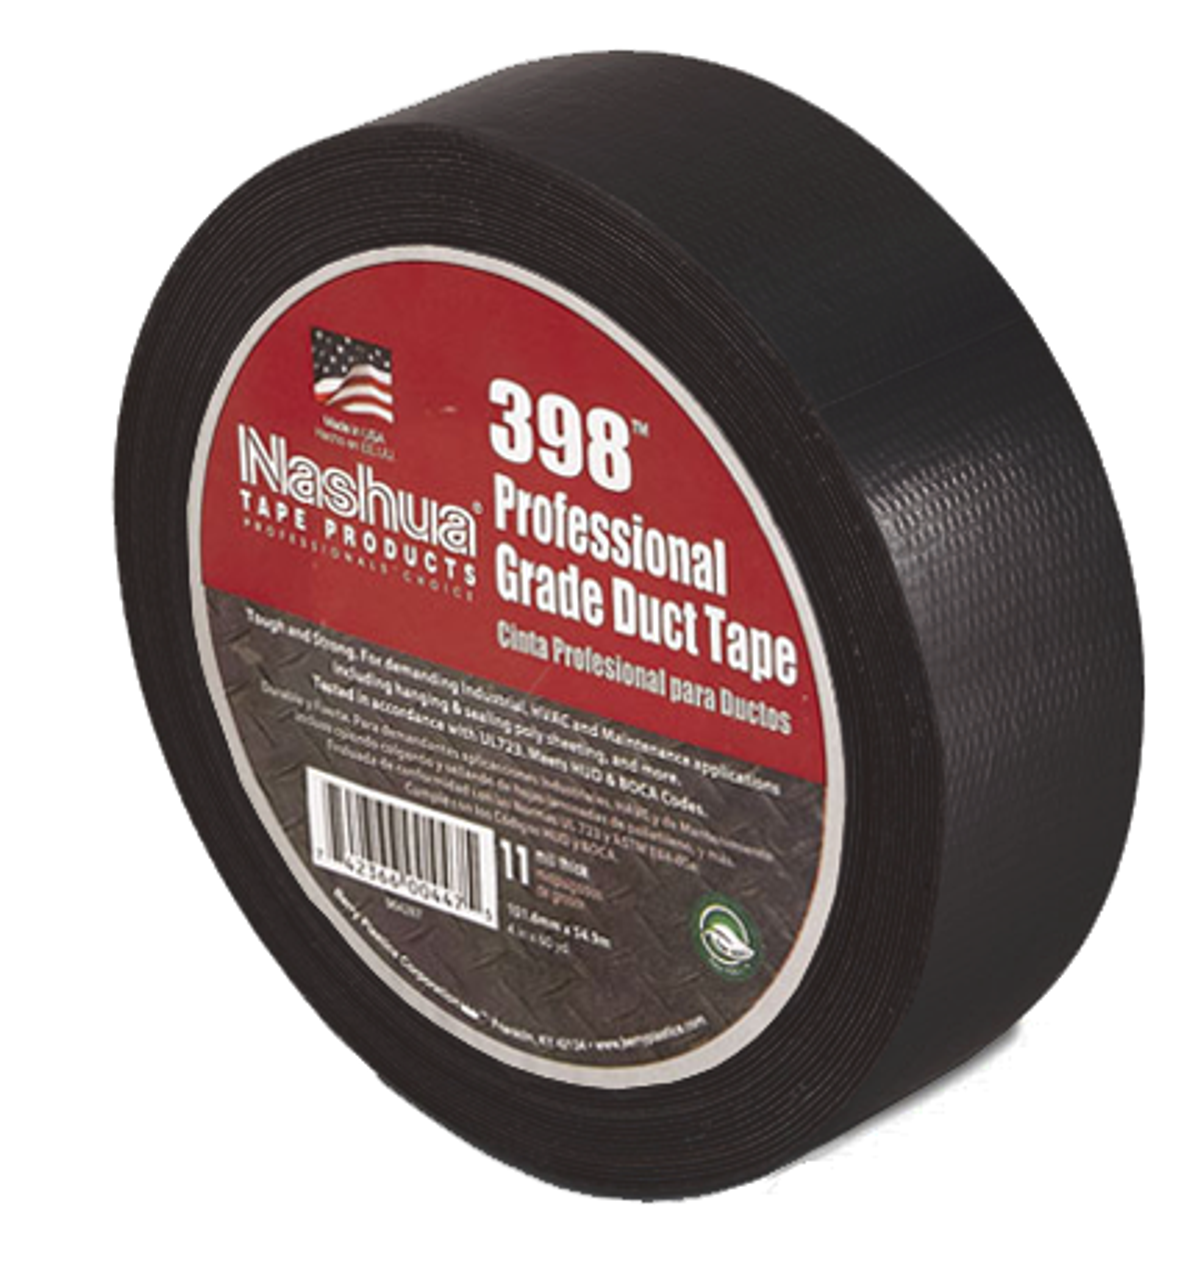 2 x 60 yd Nashua Professional Grade Duct Tape - Black 398-BLK